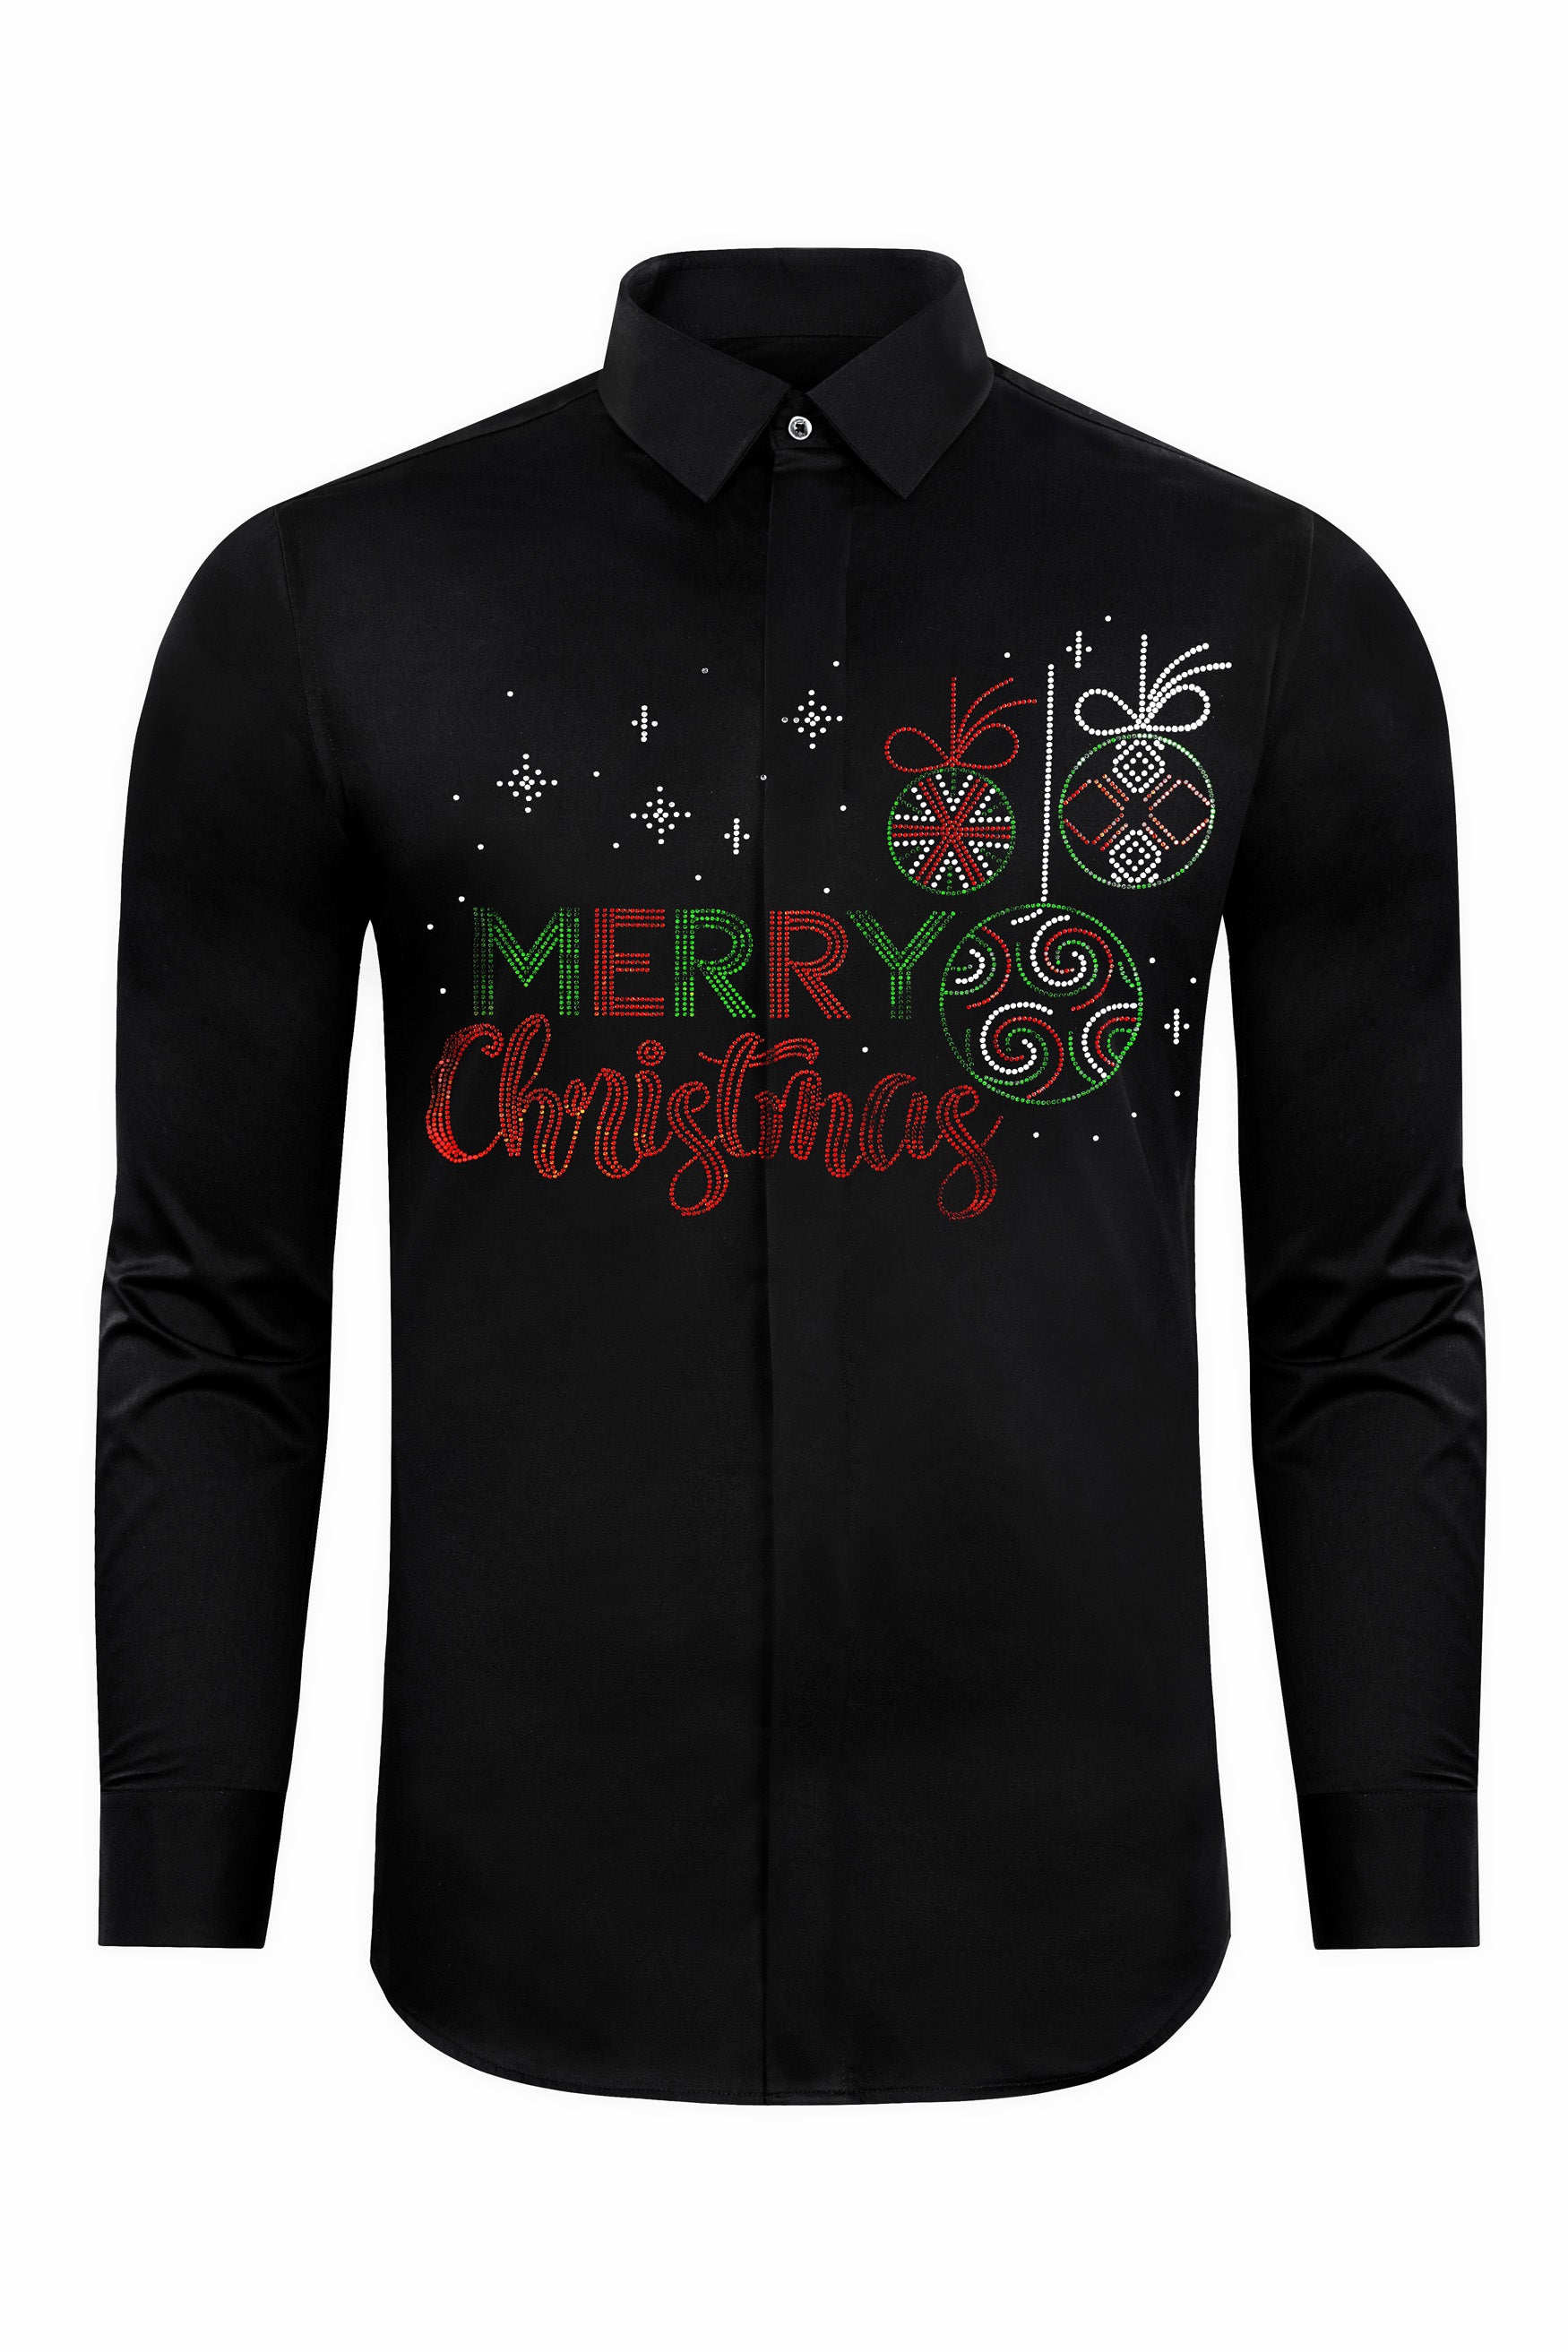 Jade Black Merry Christmas Hotfix Subtle Sheen Super Soft Premium Cotton Designer Shirt 12261-BLK-P782-38, 12261-BLK-P782-H-38, 12261-BLK-P782-39, 12261-BLK-P782-H-39, 12261-BLK-P782-40, 12261-BLK-P782-H-40, 12261-BLK-P782-42, 12261-BLK-P782-H-42, 12261-BLK-P782-44, 12261-BLK-P782-H-44, 12261-BLK-P782-46, 12261-BLK-P782-H-46, 12261-BLK-P782-48, 12261-BLK-P782-H-48, 12261-BLK-P782-50, 12261-BLK-P782-H-50, 12261-BLK-P782-52, 12261-BLK-P782-H-52